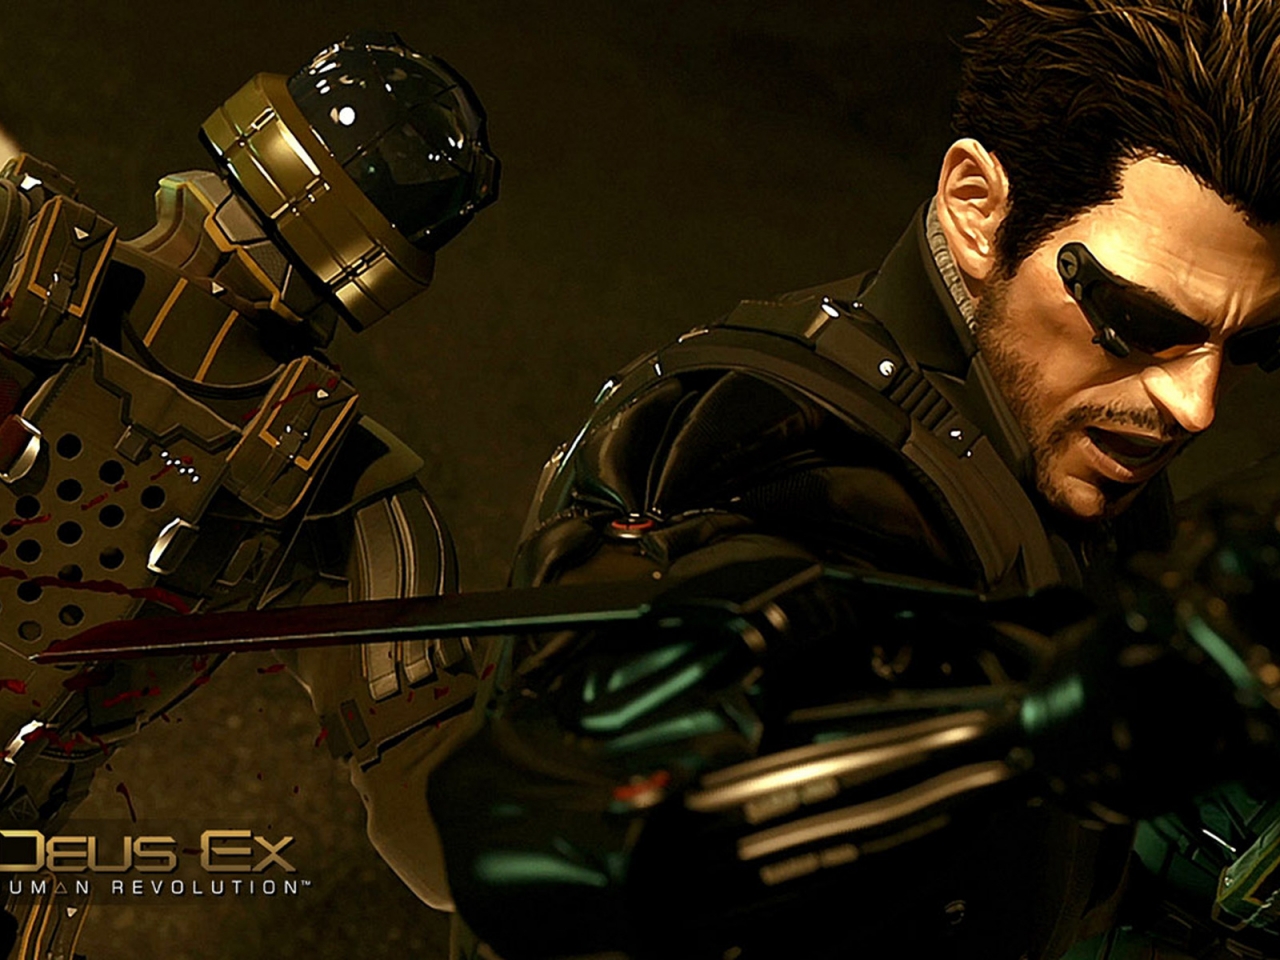 Deus Ex Human Revolution Poster for 1280 x 960 resolution